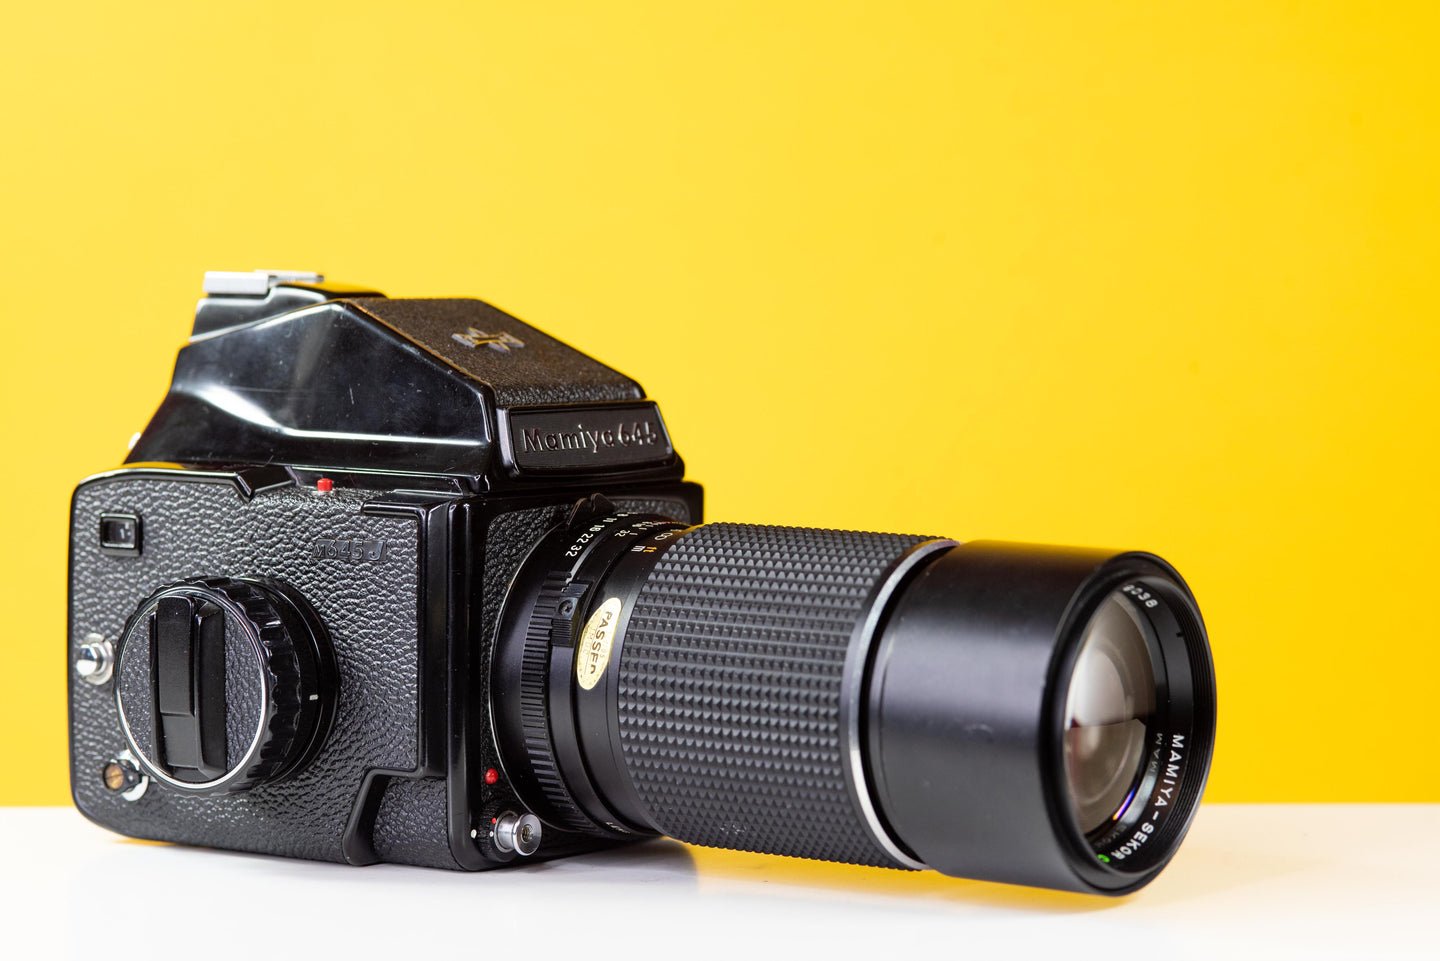 Mamiya M645J 120 Medium Format Film Camera with Mamiya Sekor 210mm f/4 Lens